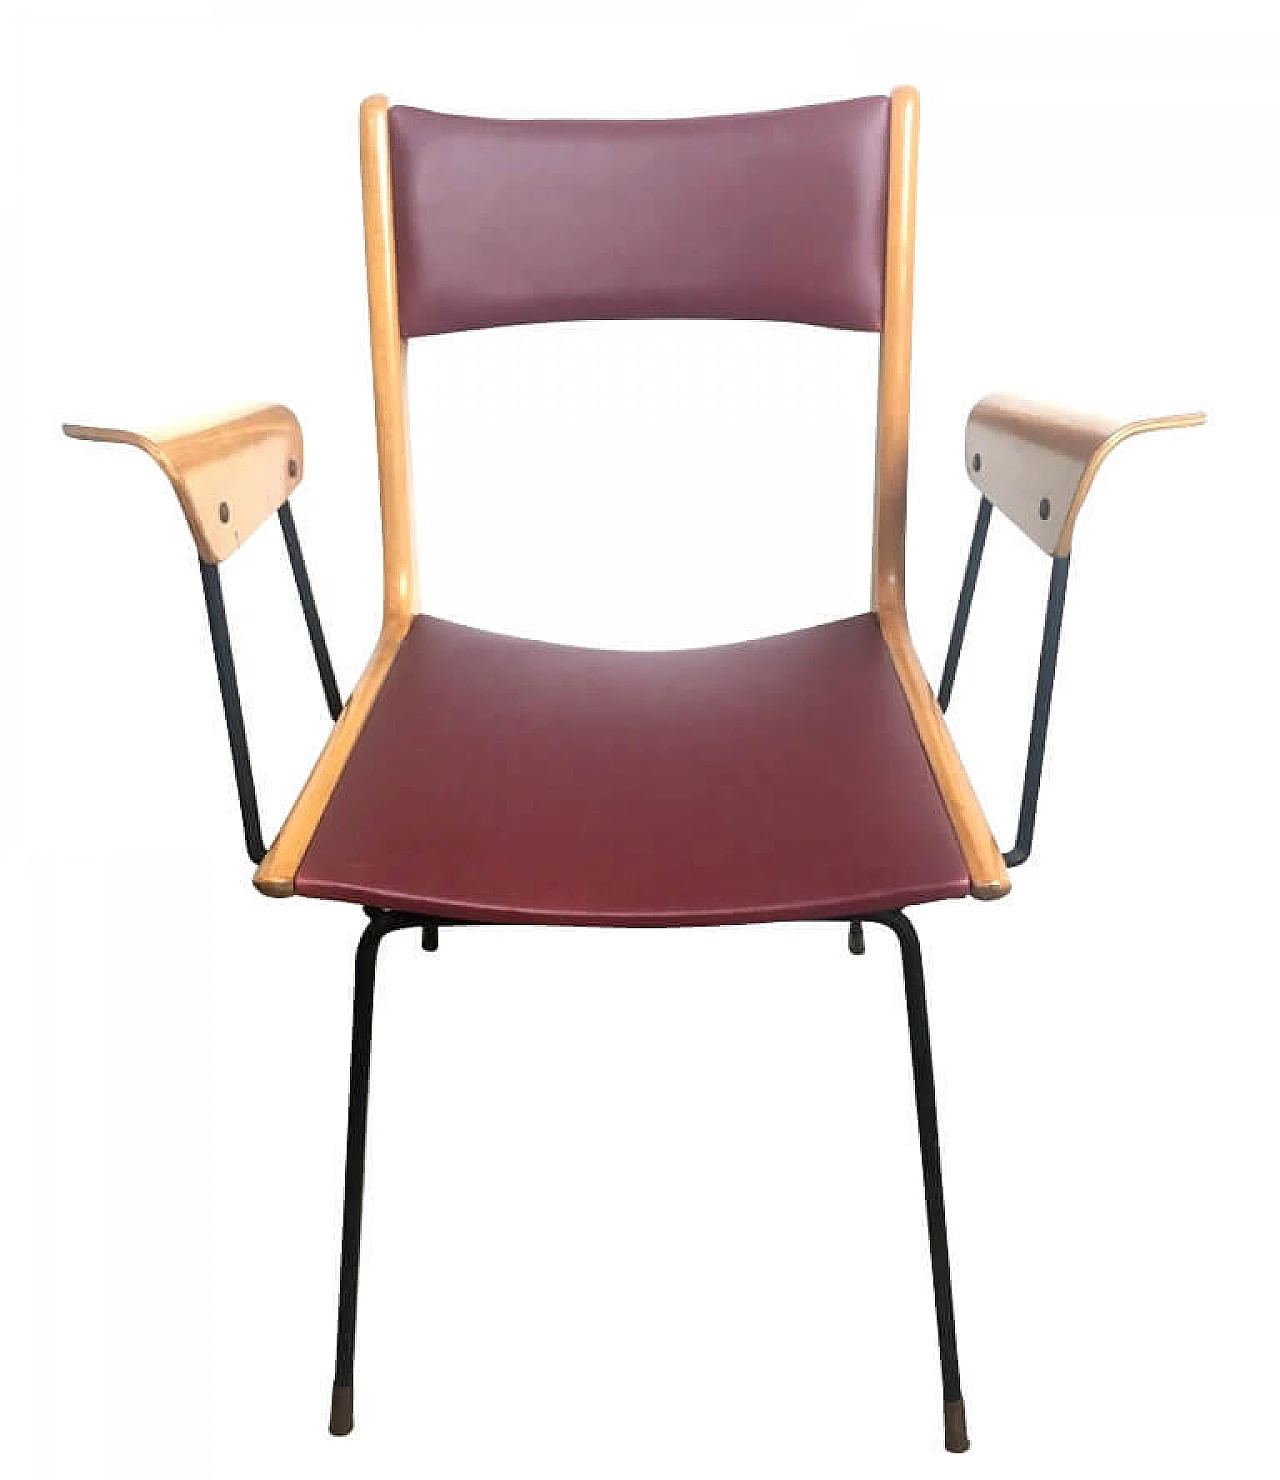 Boomerang chair by Carlo de Carli, 1950s 1183904